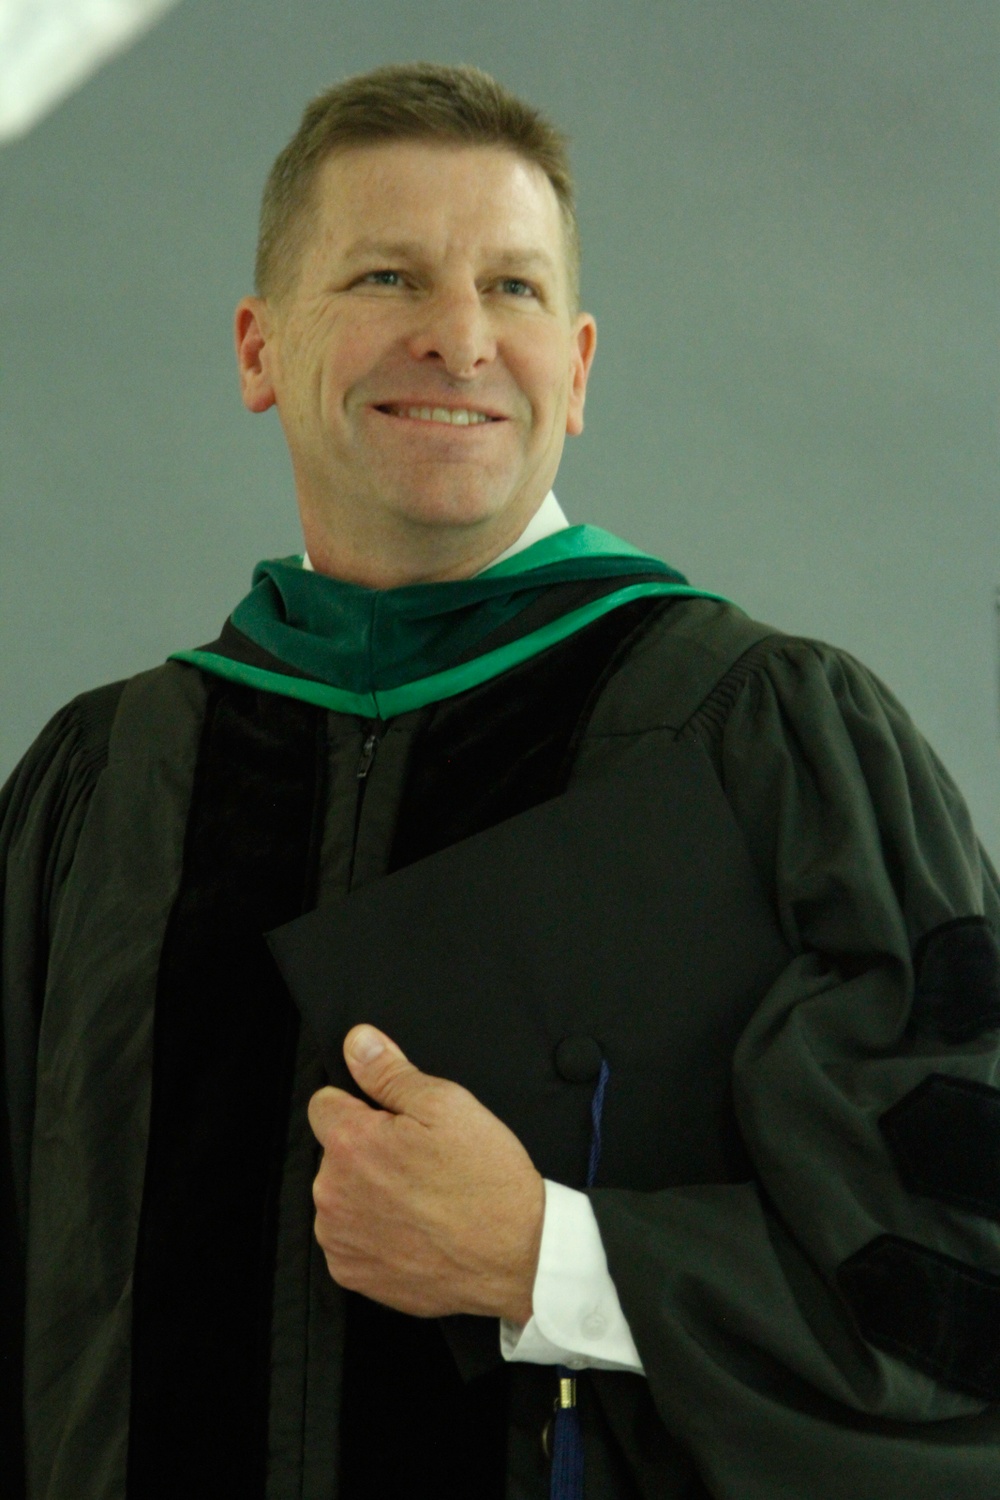 Brig. Gen. W. Scott Lynn Receives the Fellowship of the American College of Radiology